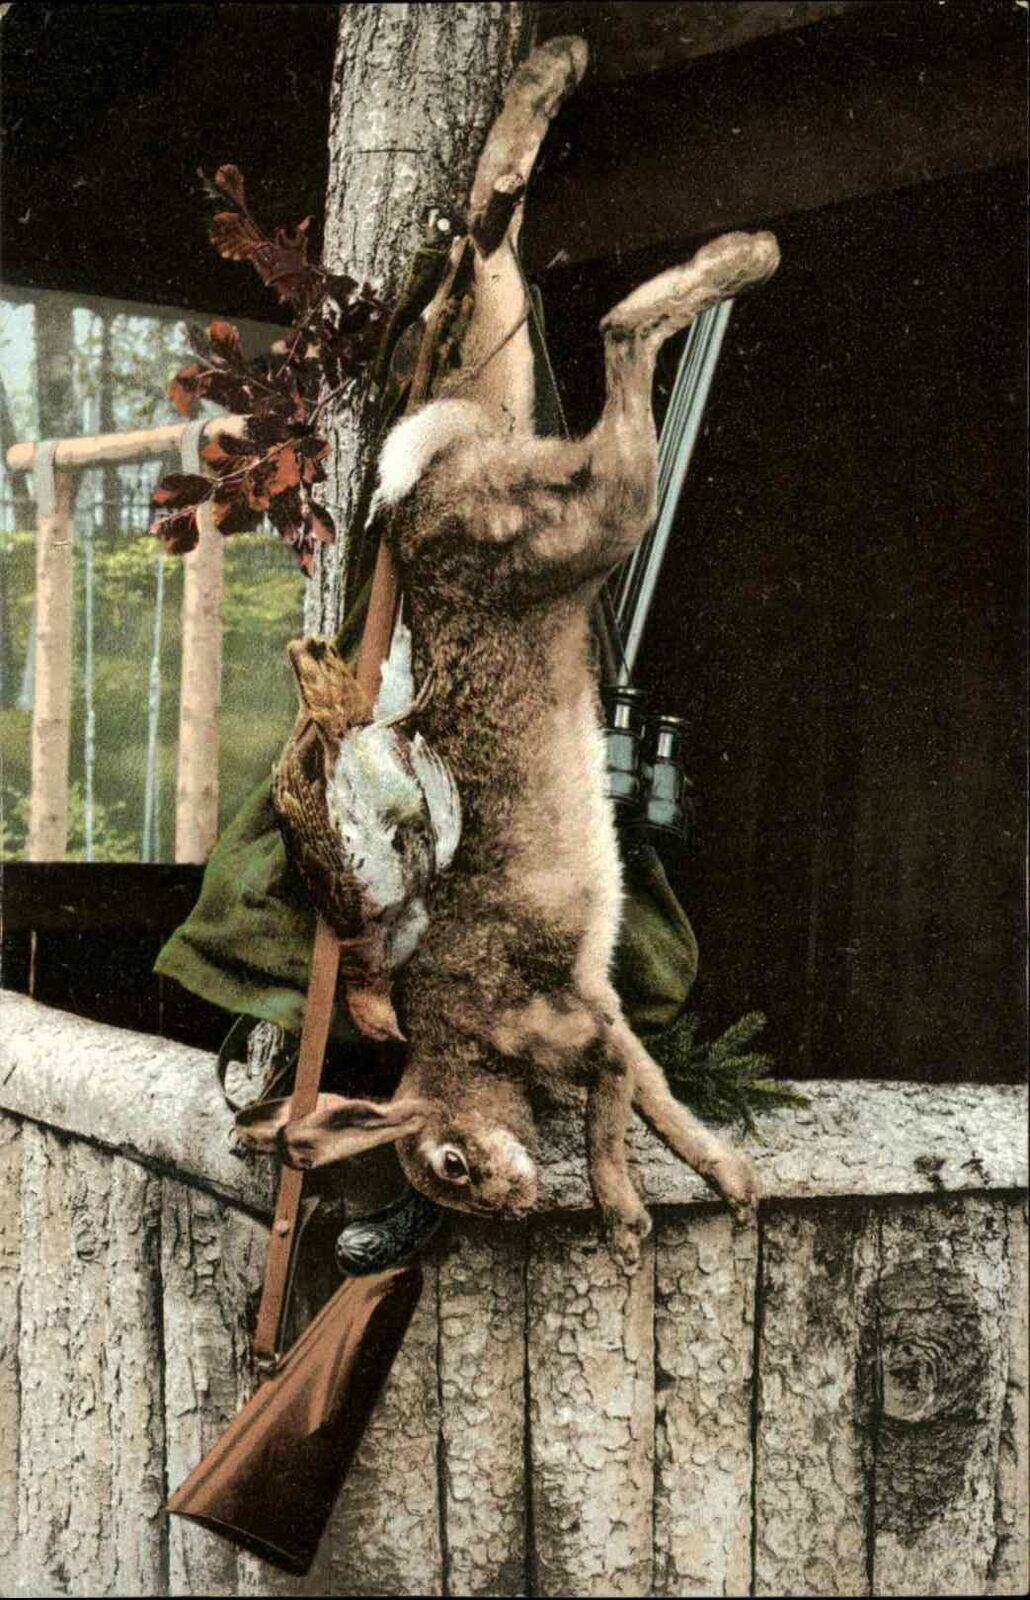 Hunting Gear Dead Rabbit Gun Binoculars c1905 Postcard